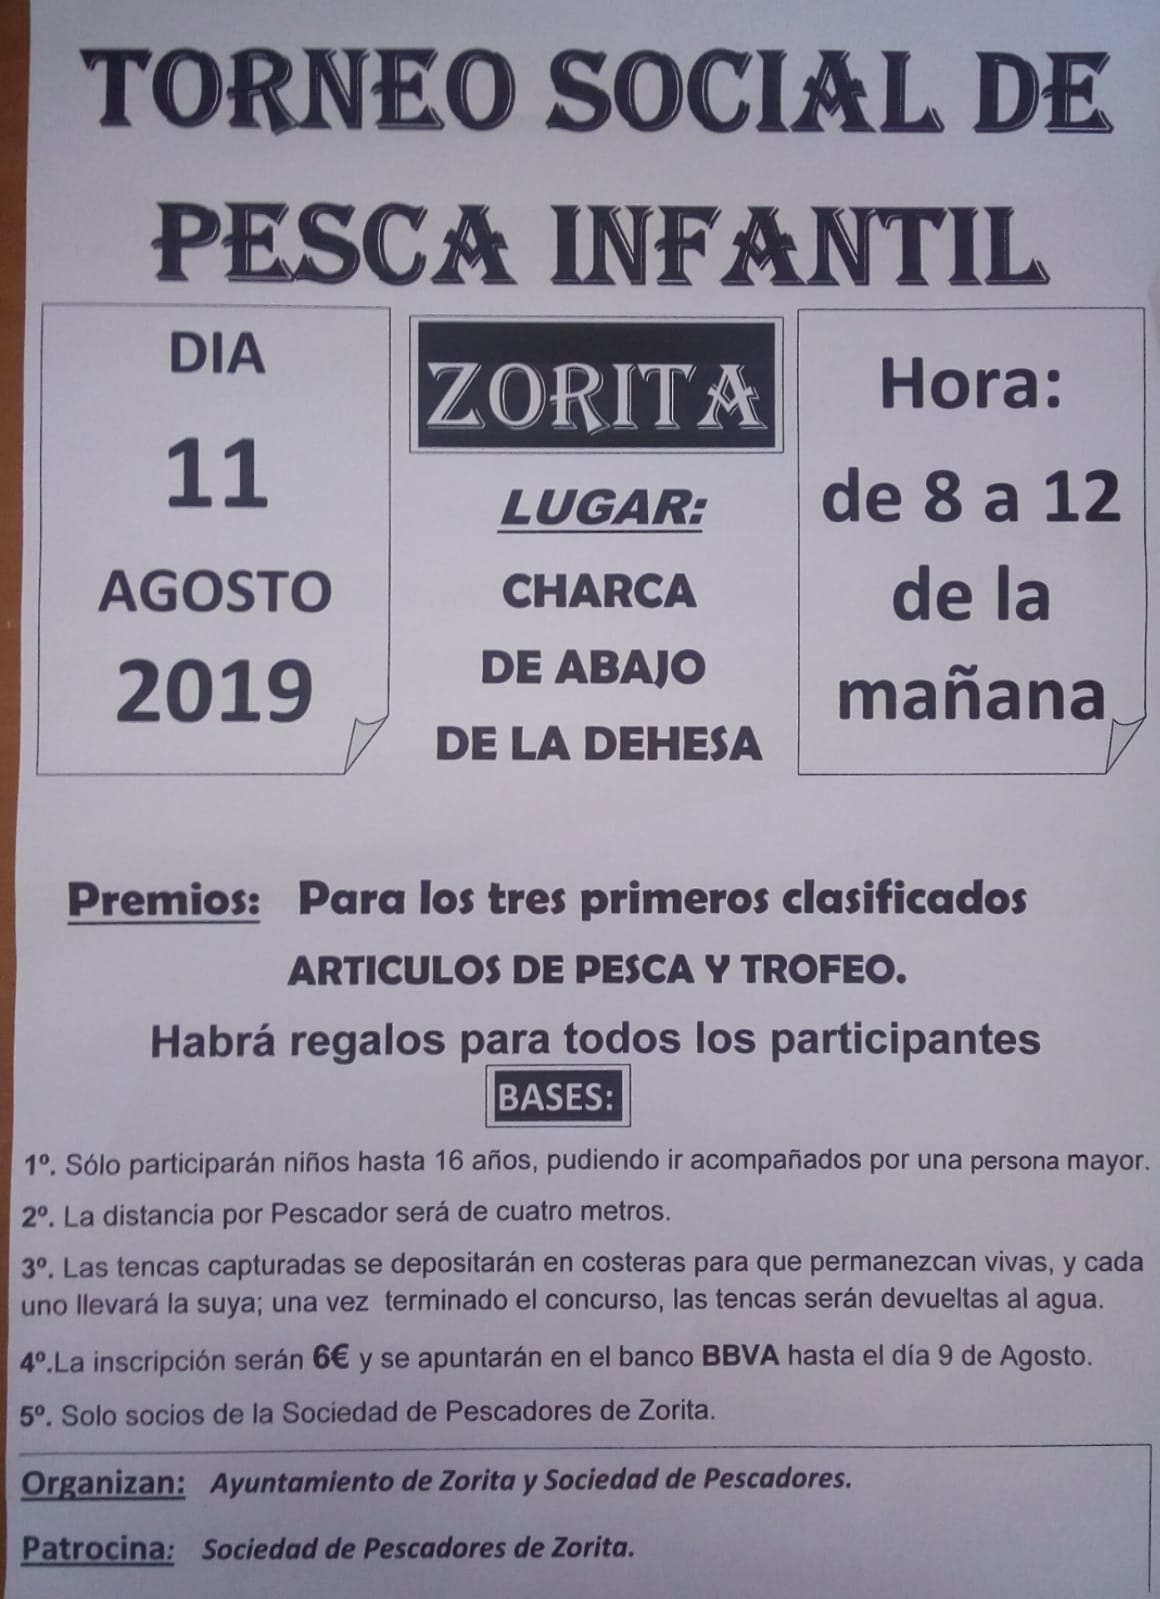 Torneo social de pesca infantil agosto 2019 - Zorita (Cáceres)